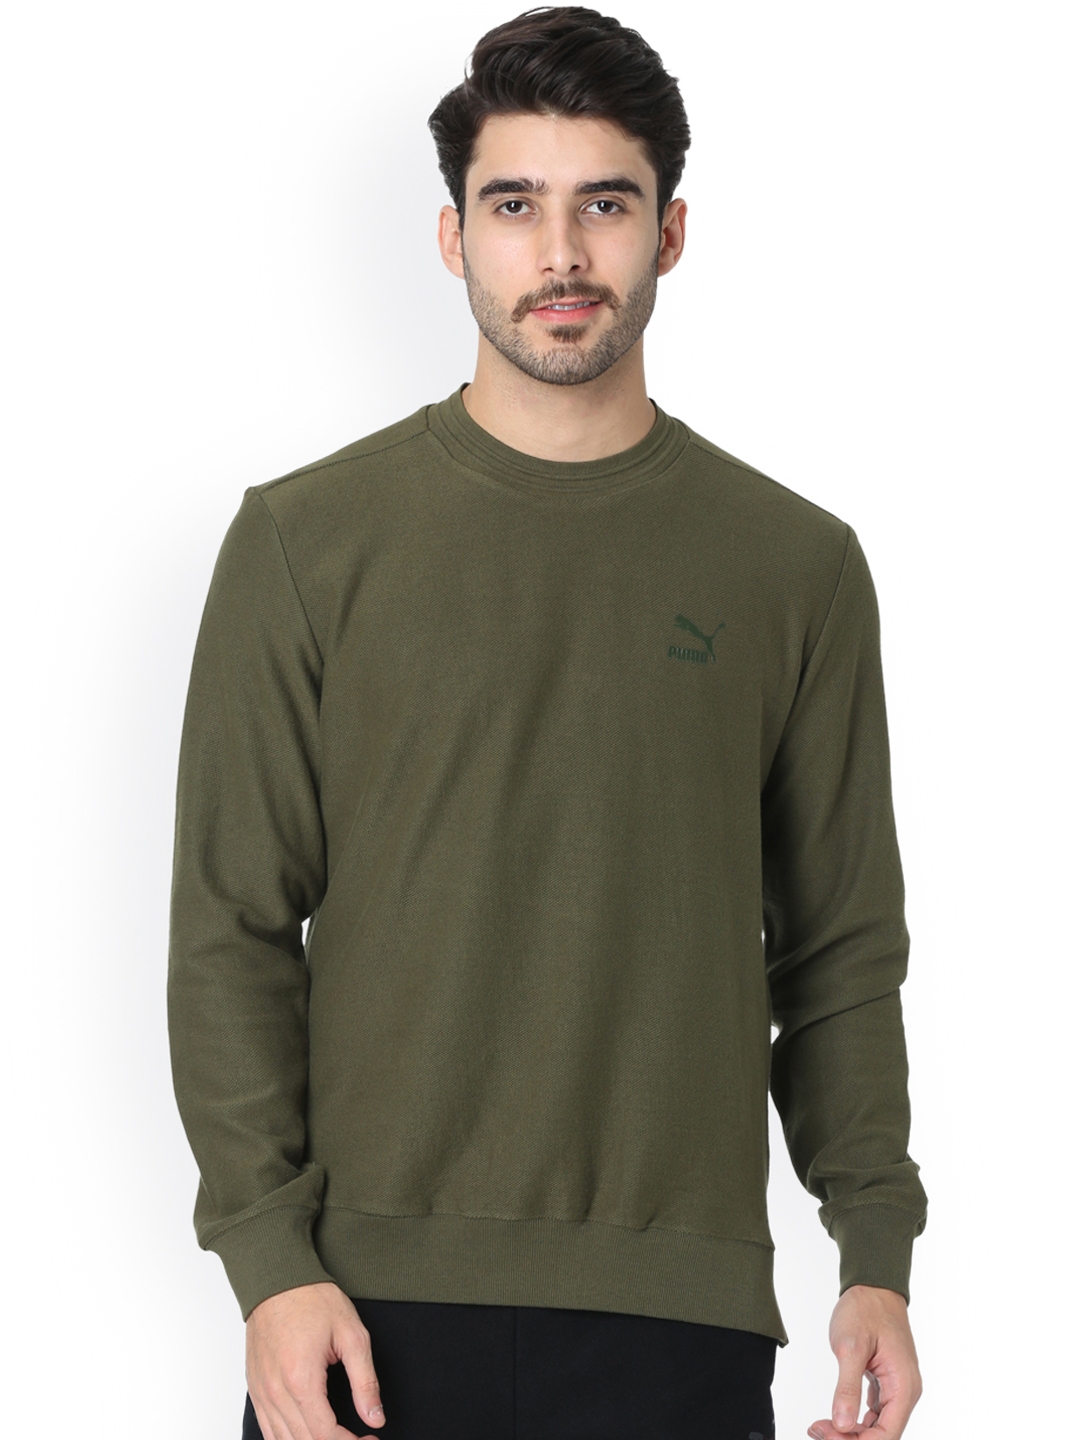 puma one8 sweatshirt